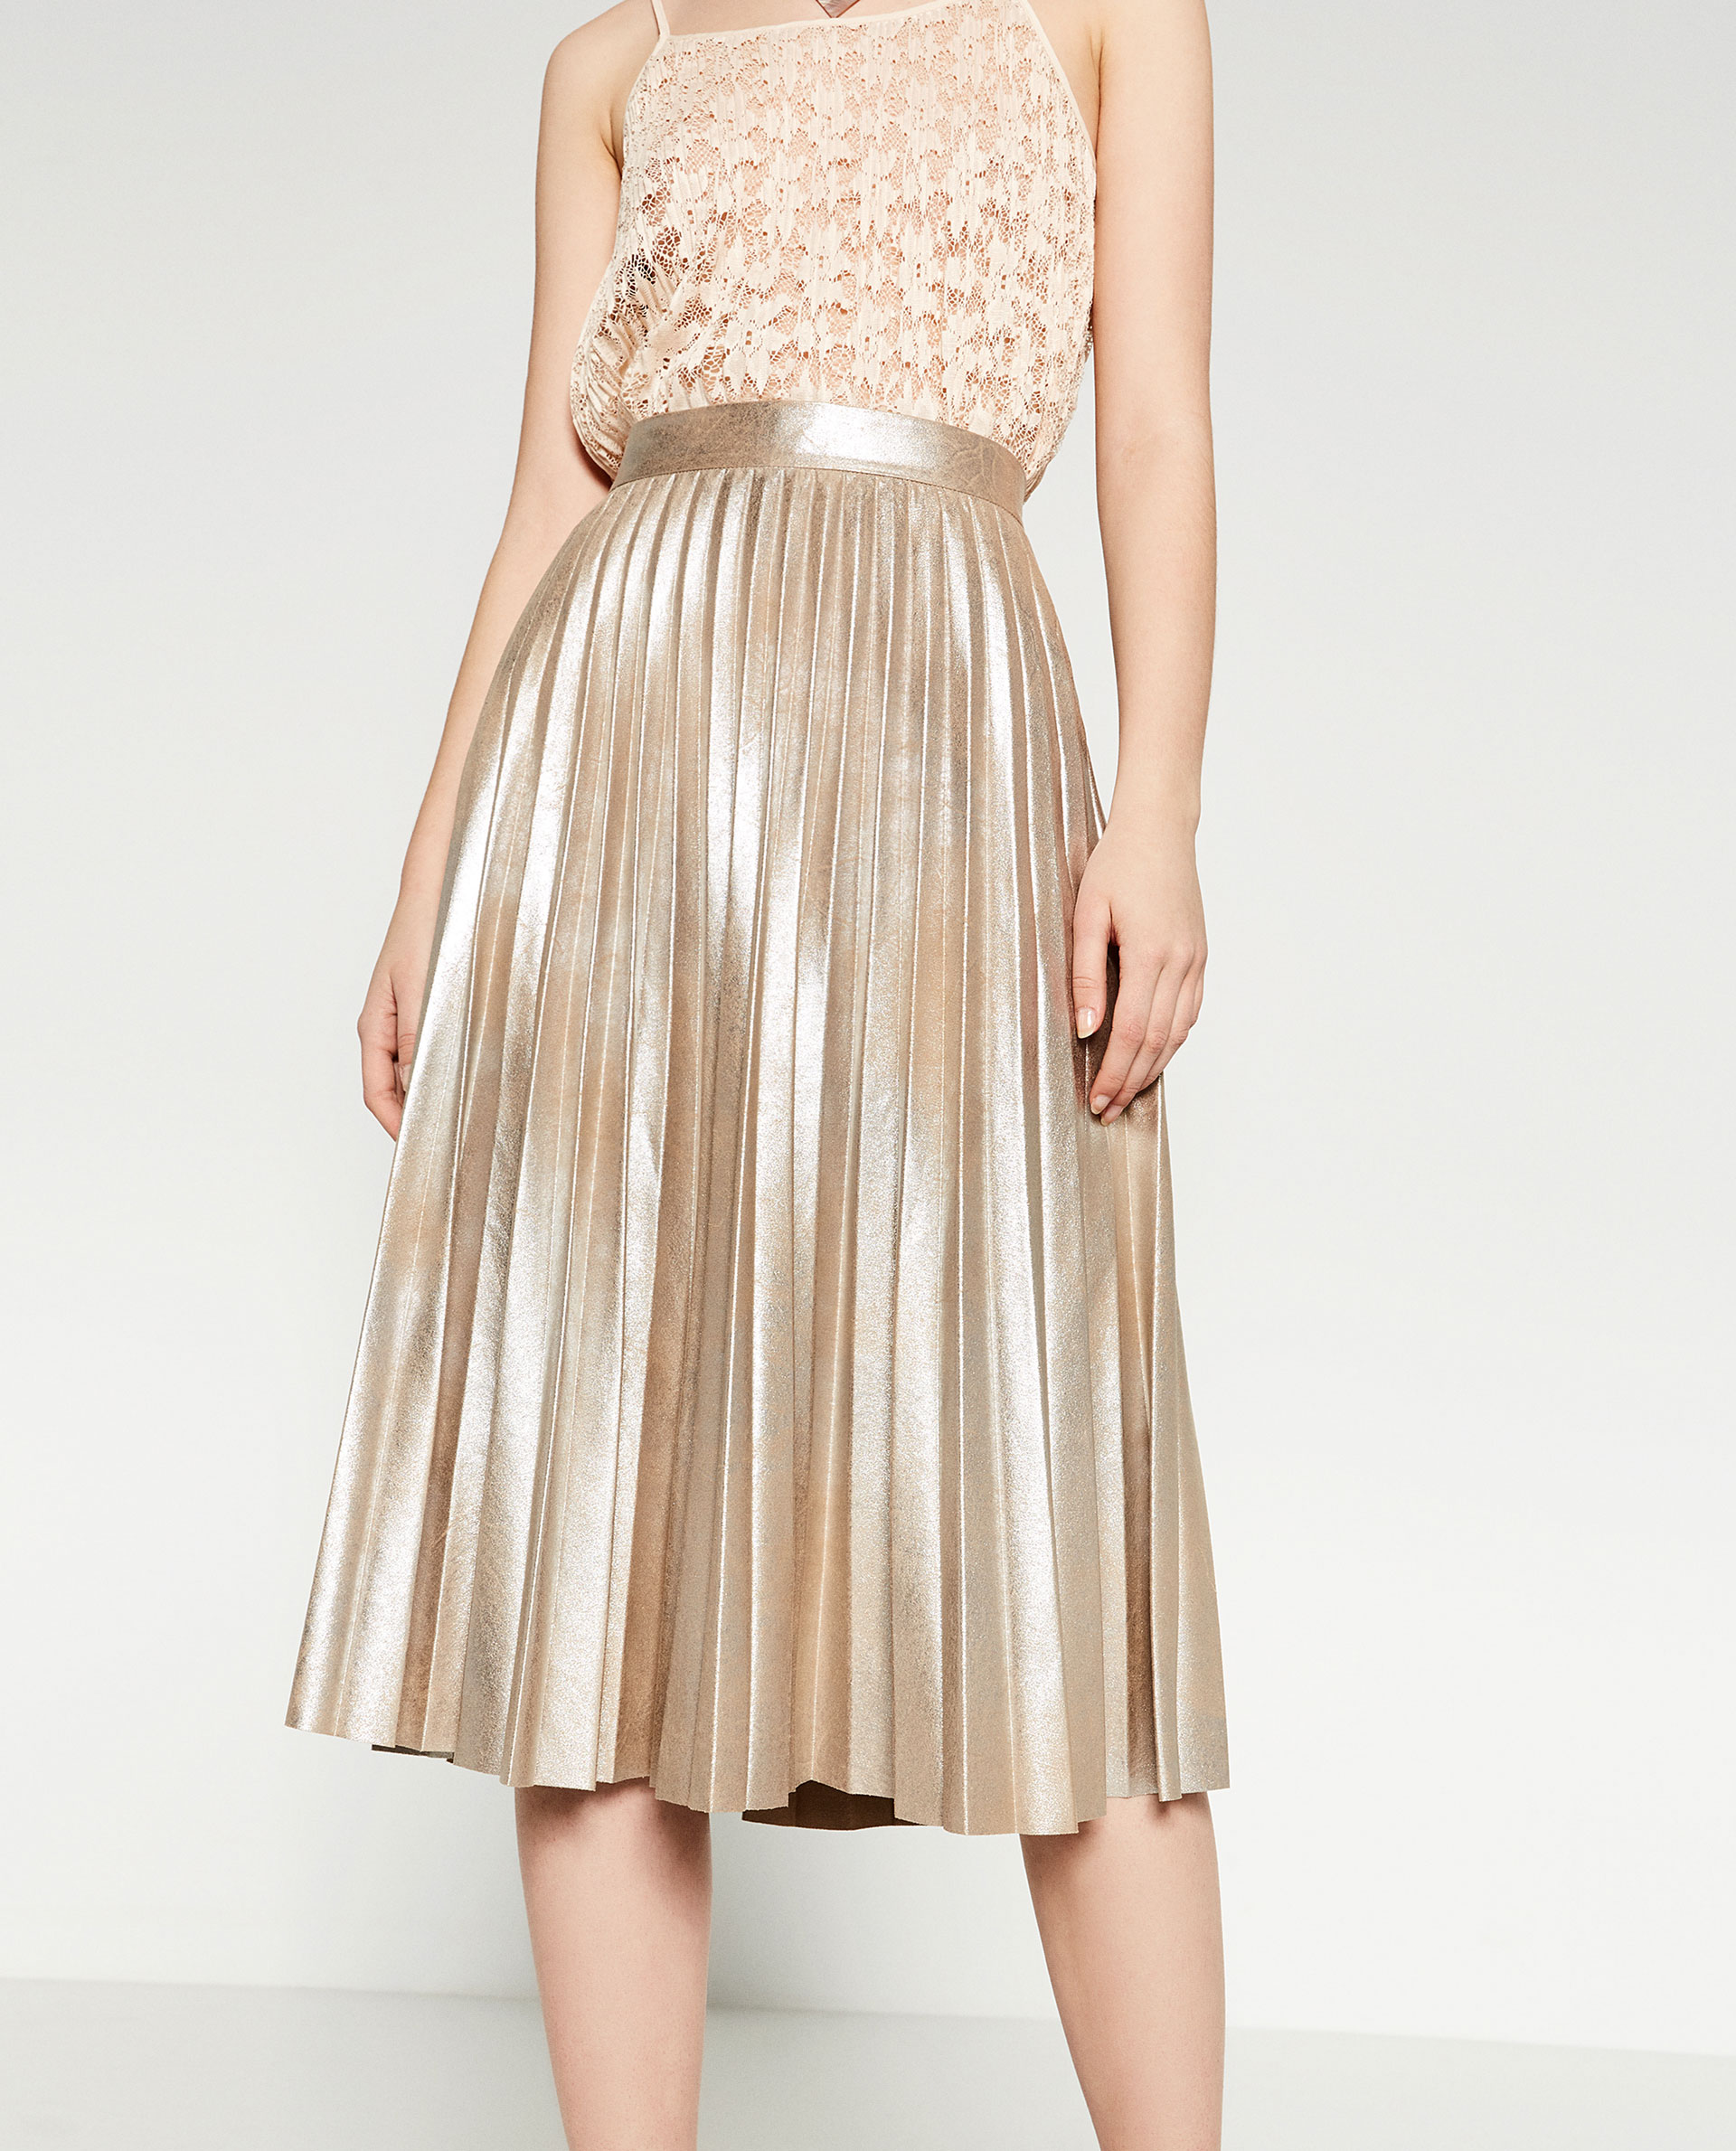 Metallic Pleated Skirt Love @Zara 